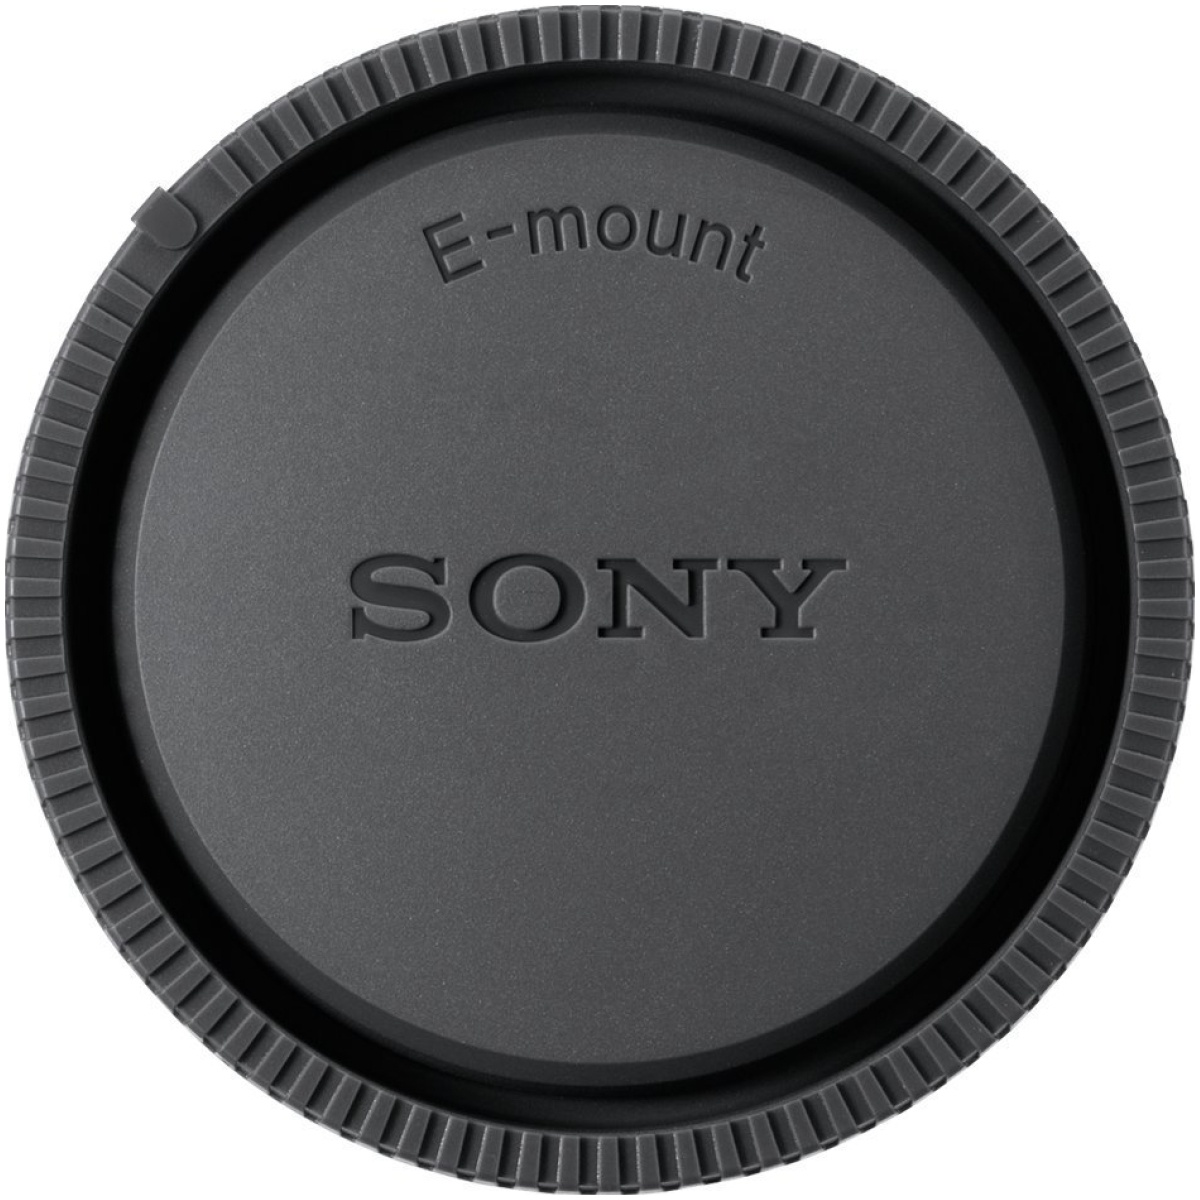 Sony ALC-R1EM hinterer Objektivdeckel E-Mount